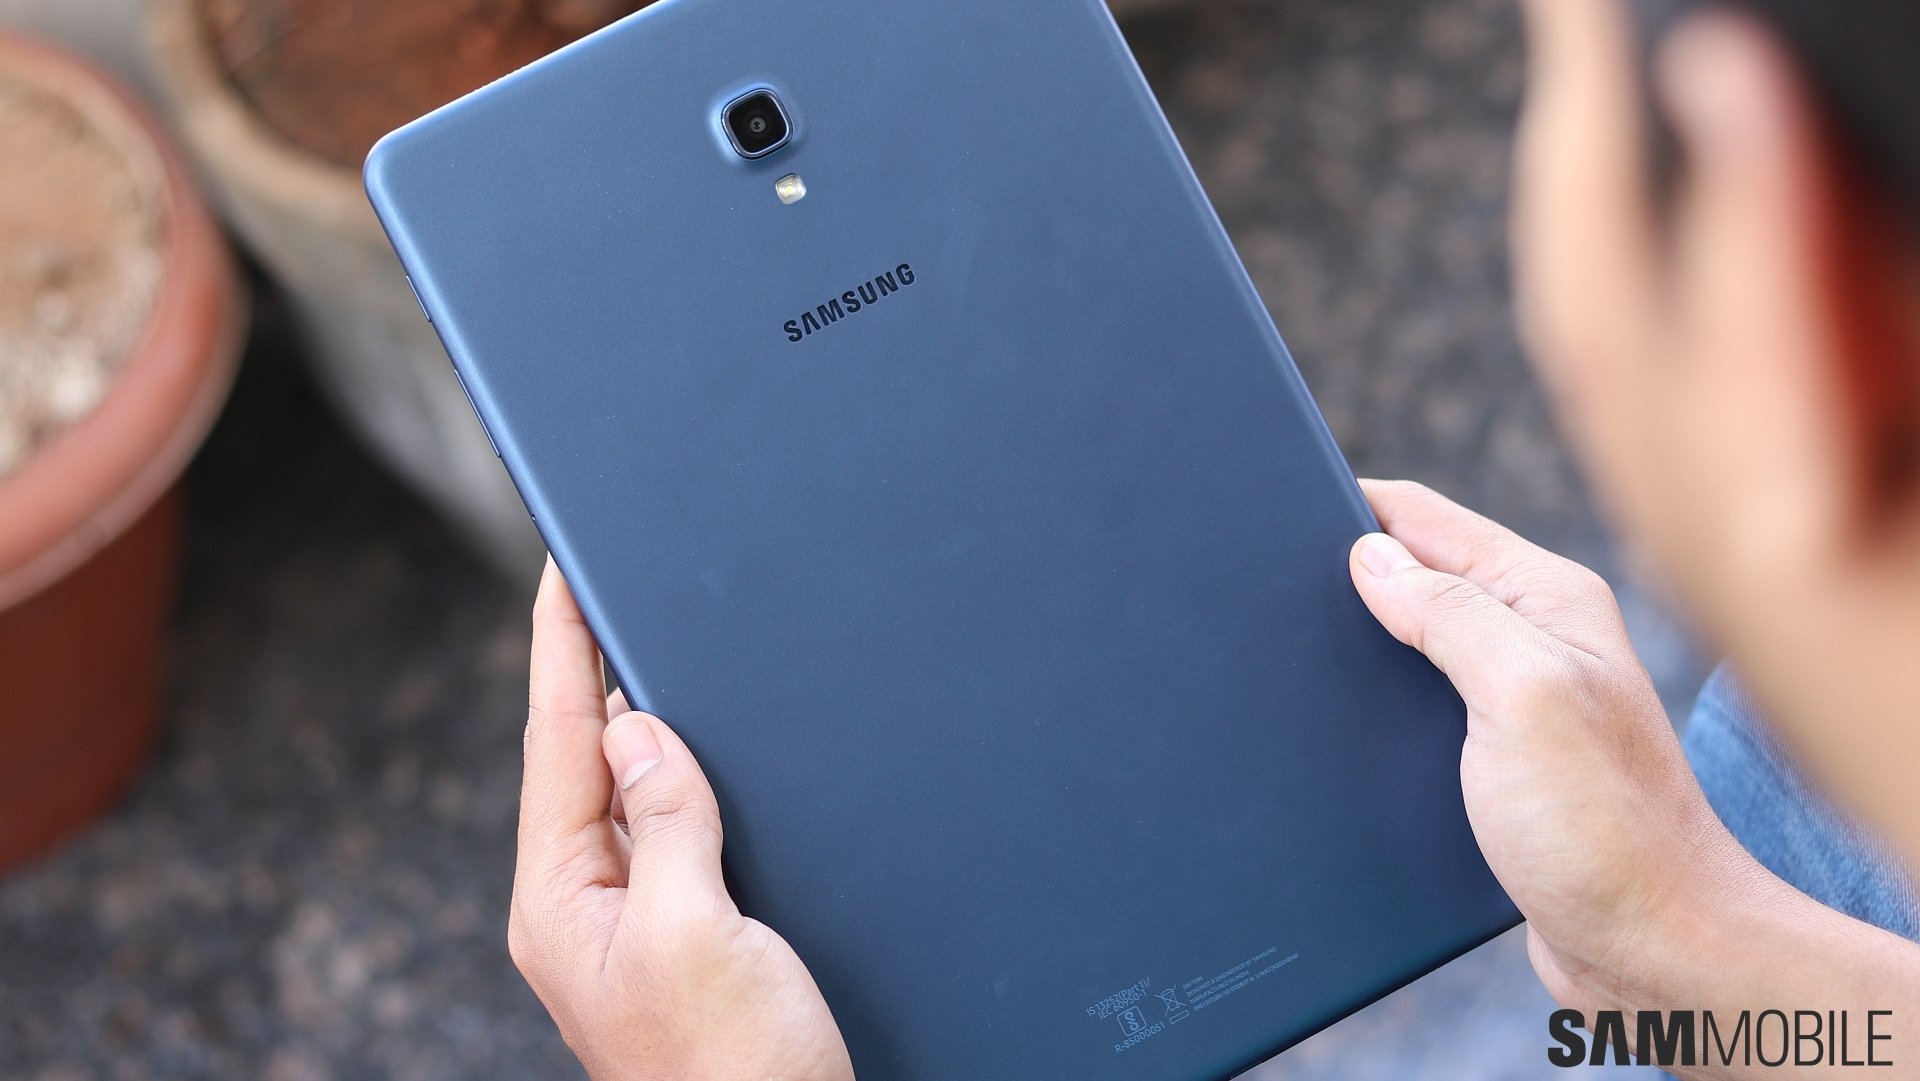 Opsplitsen Vergevingsgezind Protestant Samsung Galaxy Tab A 10.5 review: An unassuming mid-range tablet - SamMobile